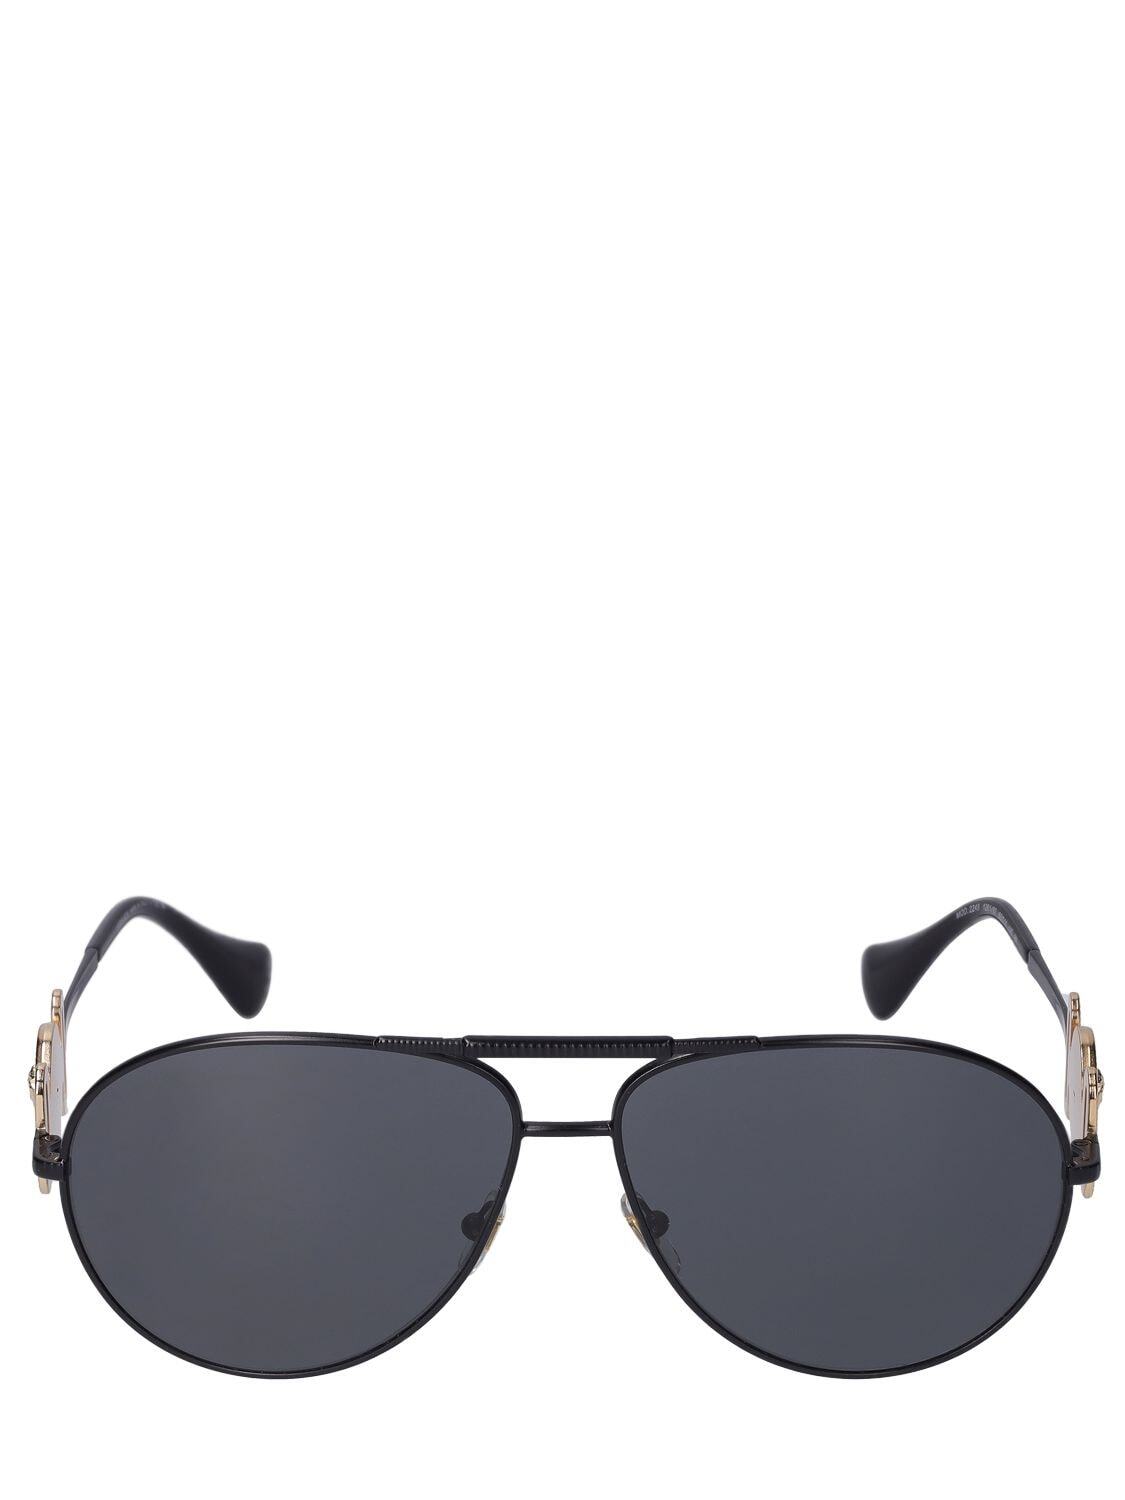 VERSACE Medusa Biggie Pilot Metal Sunglasses in black / grey